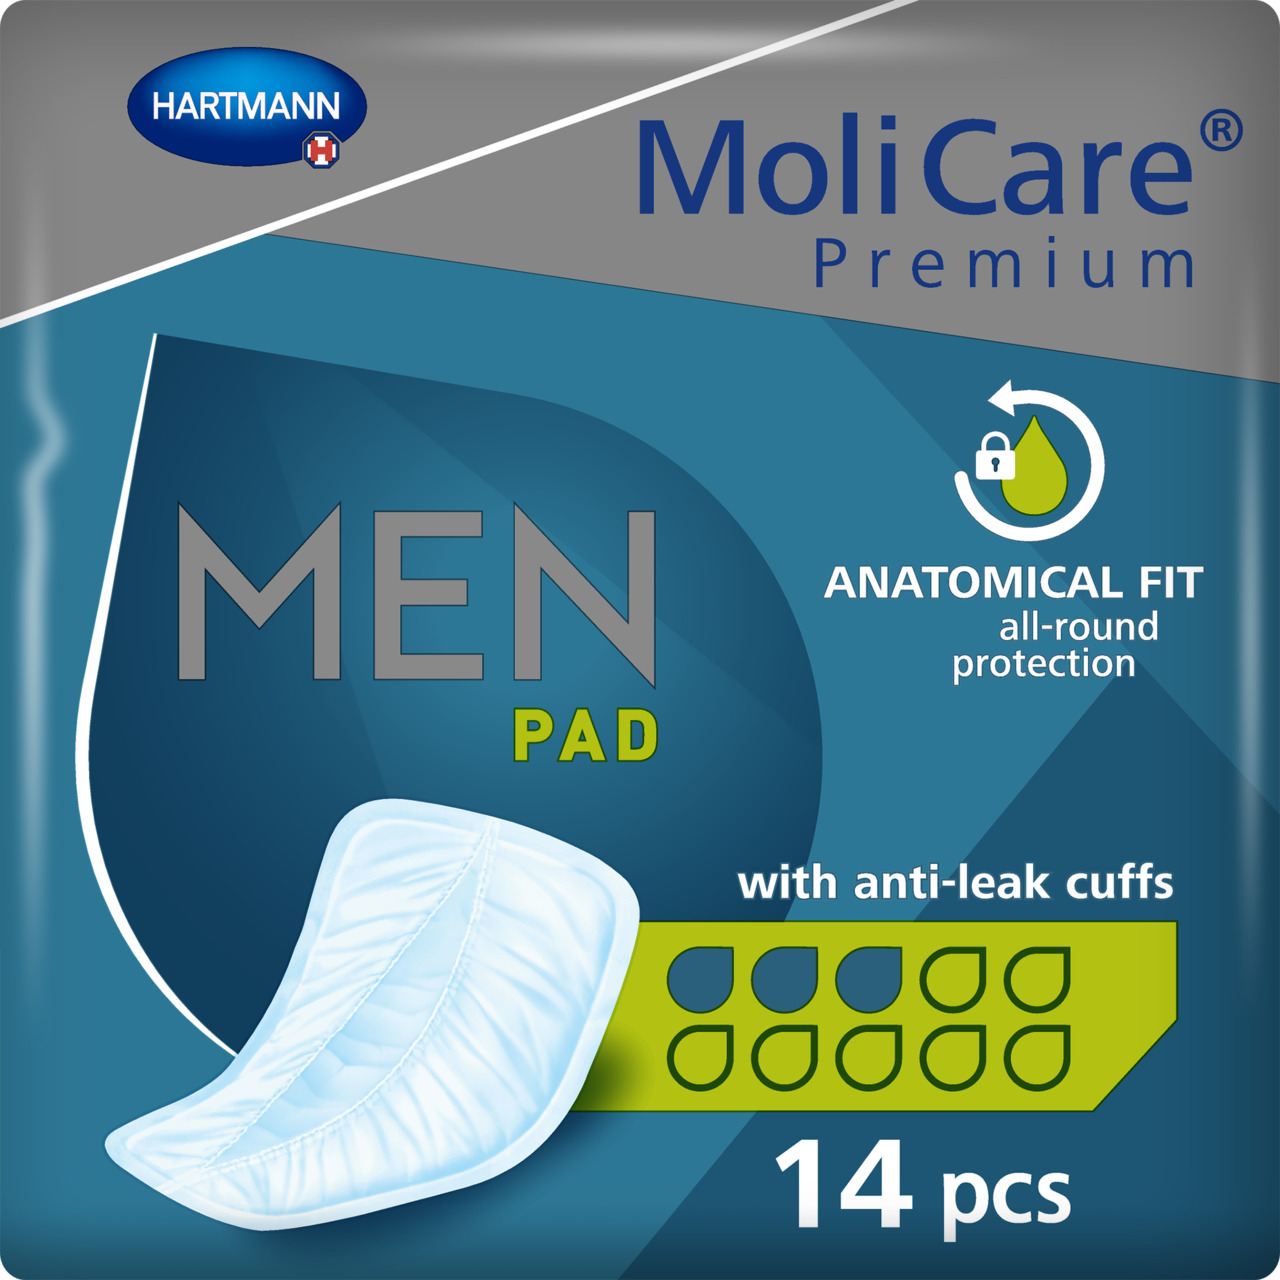 MoliCare Premium Men Pad 3 Drops